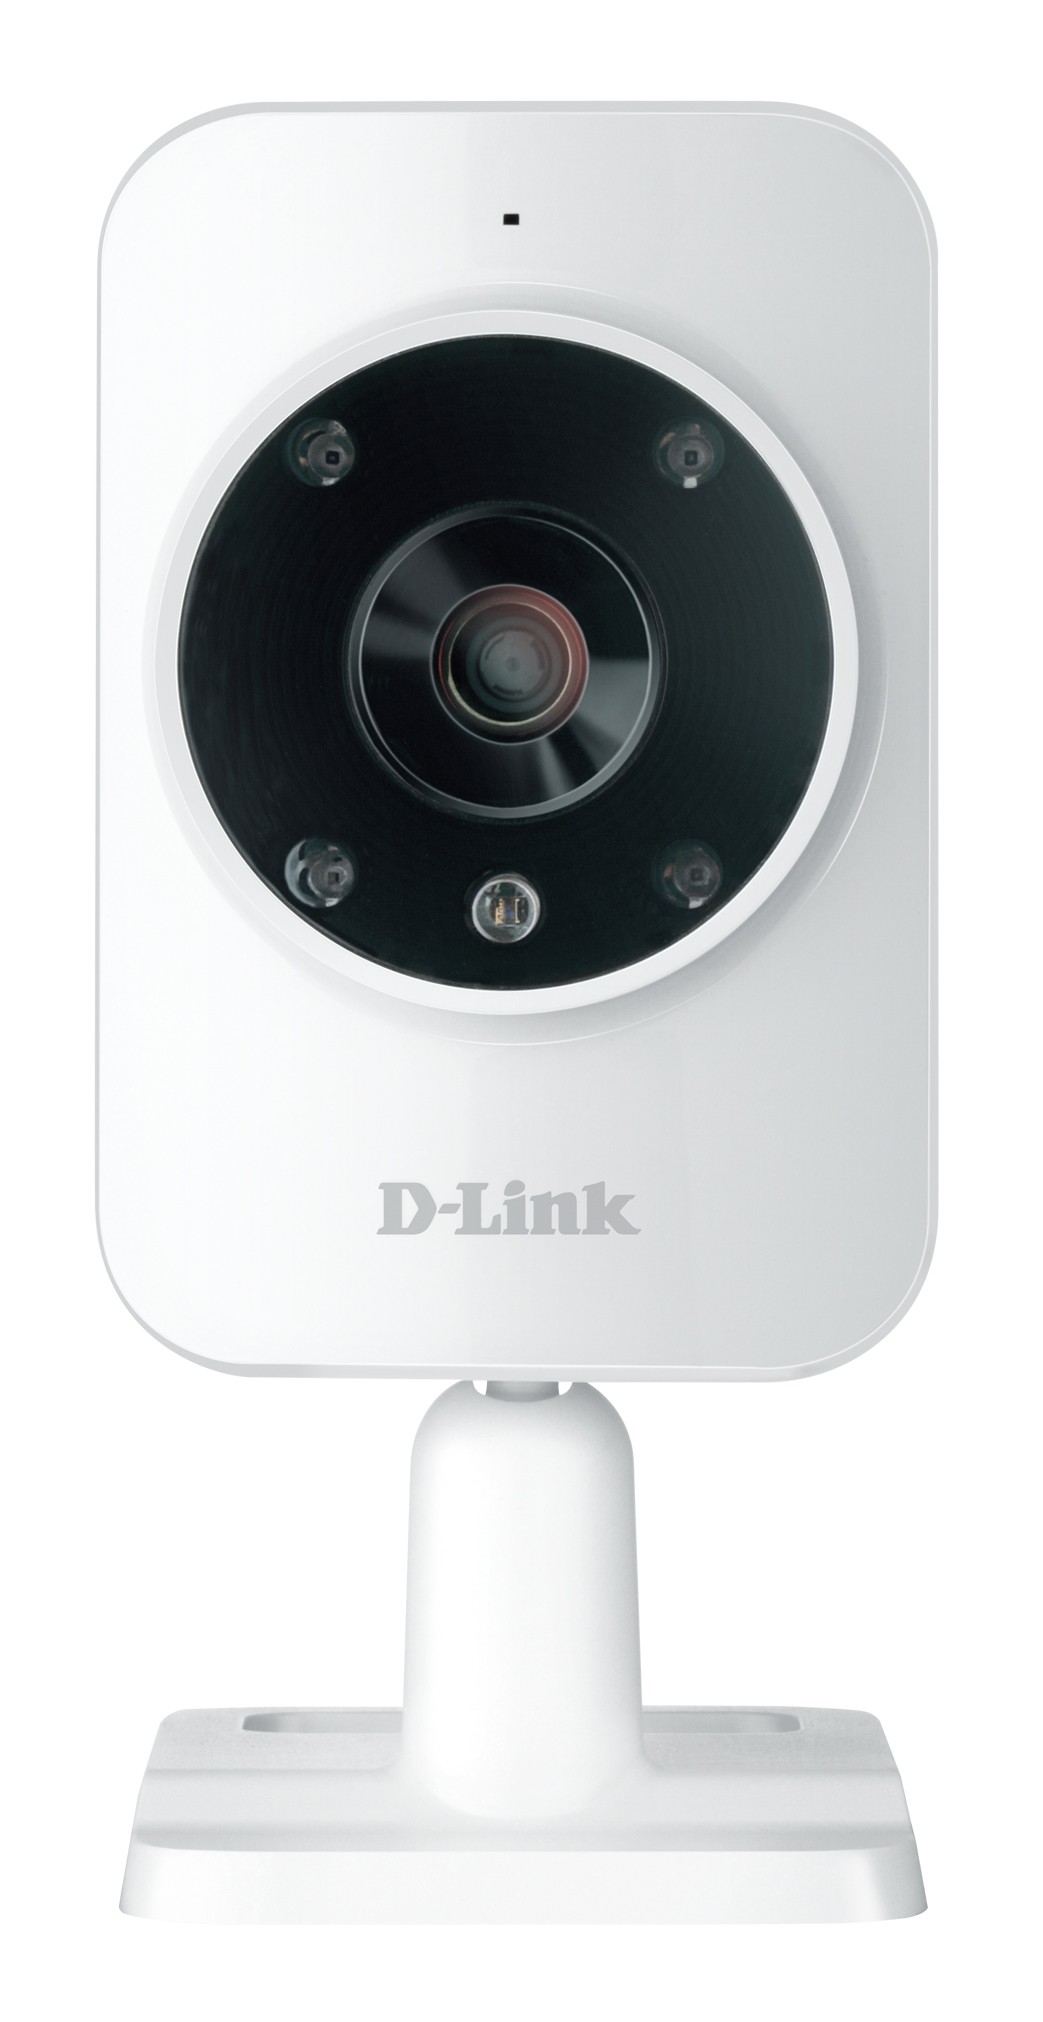 IP CAMERA -آی پی کمرا -دوربین مدار بسته تحت شبکه دي لينك-D-Link دوربین تحت شبکه دی-لینک مدل DCS-935L